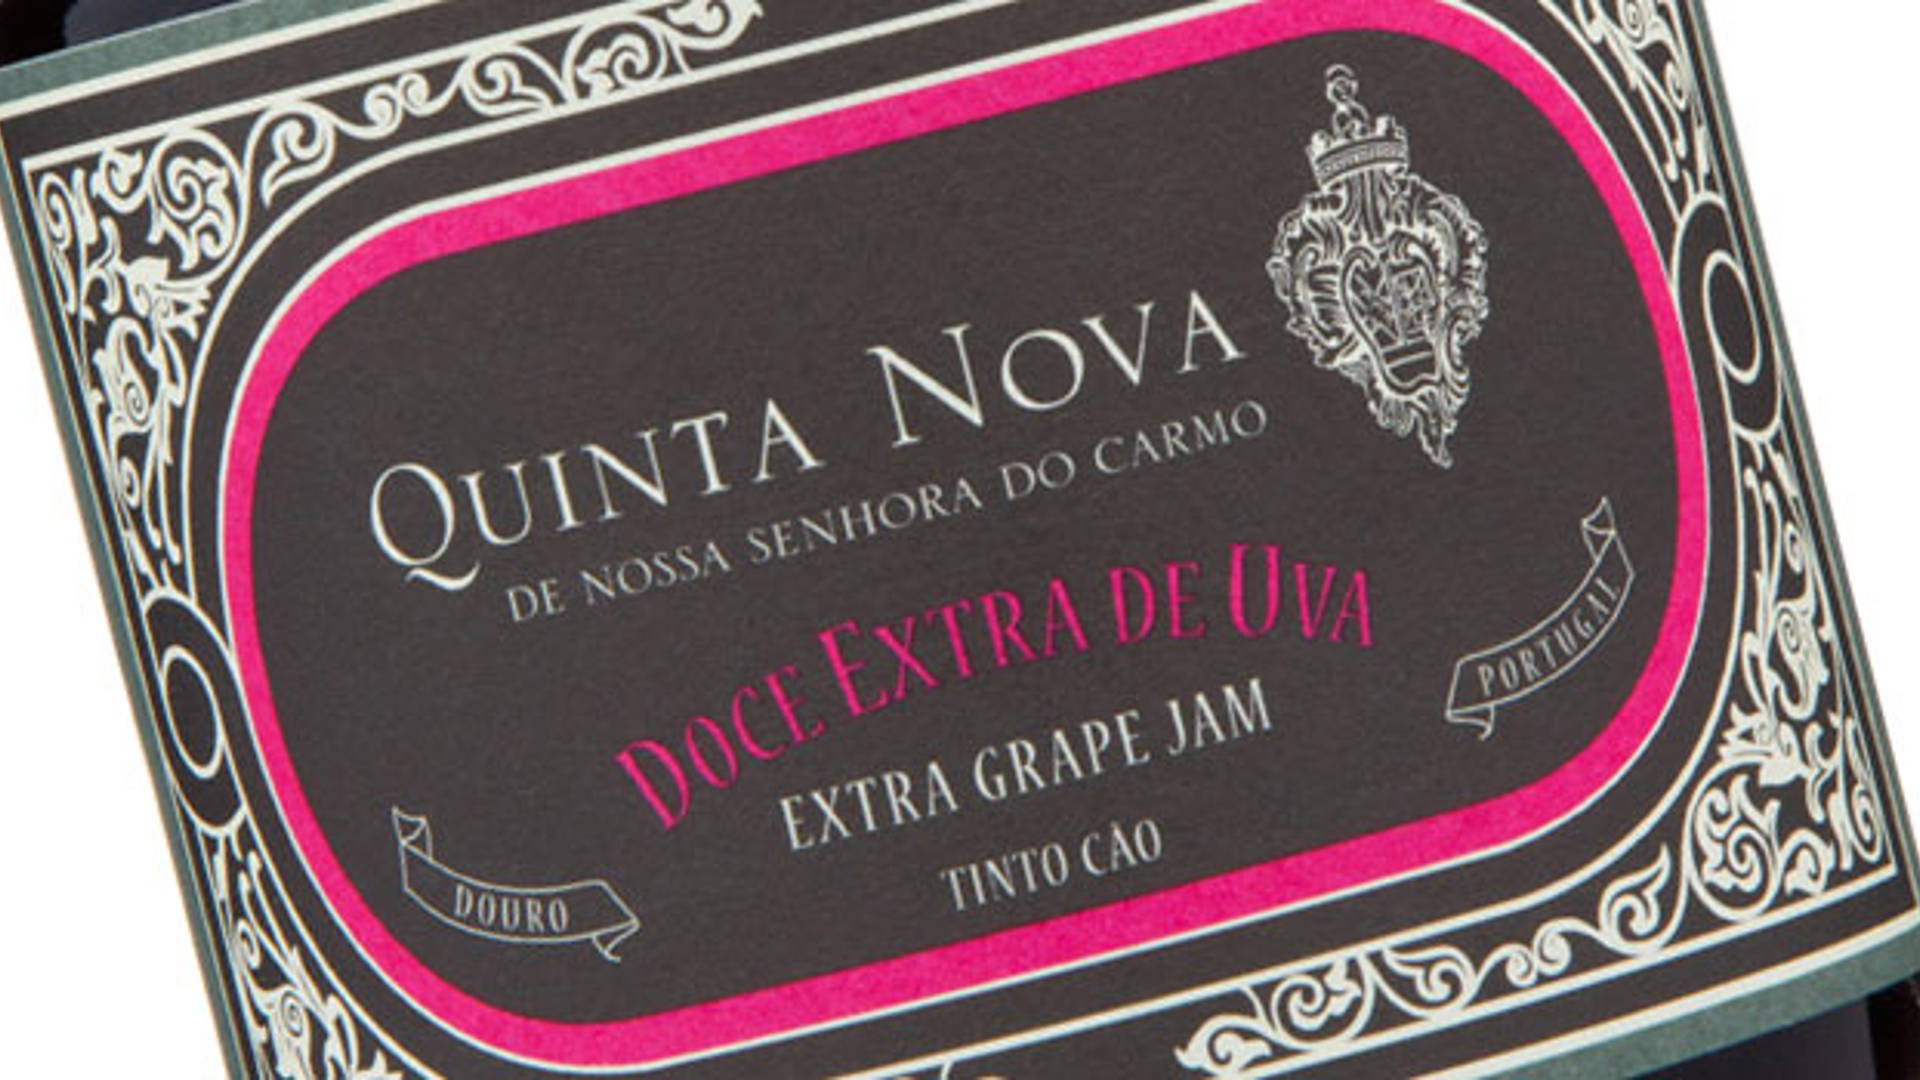 Featured image for Quinta Nova